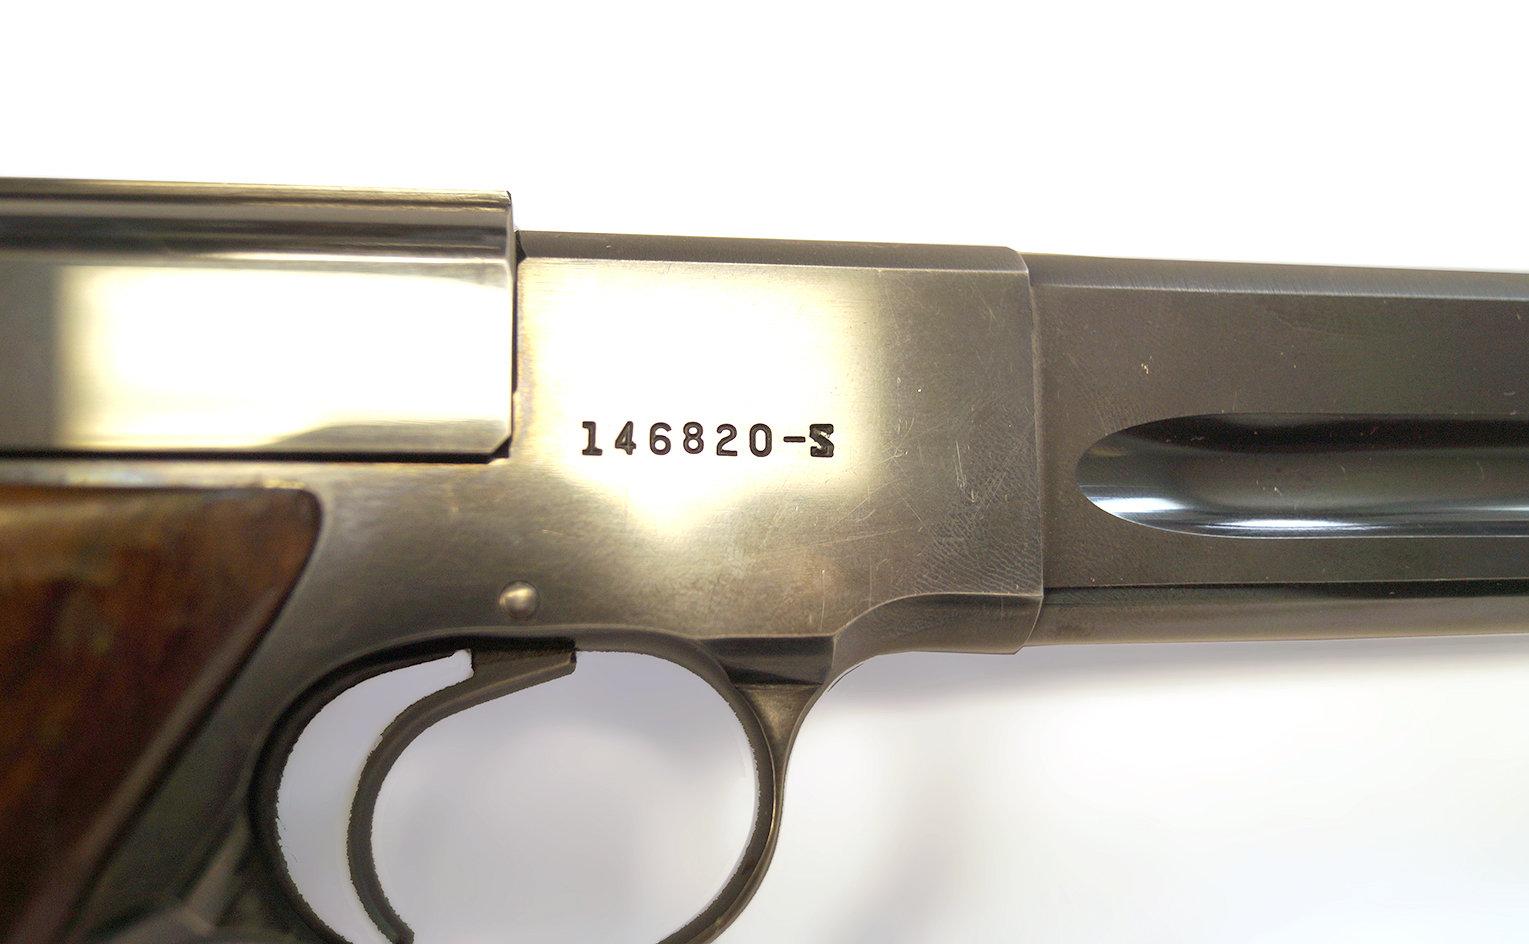 Colt Woodsmen Pistol, .22 Caliber LR